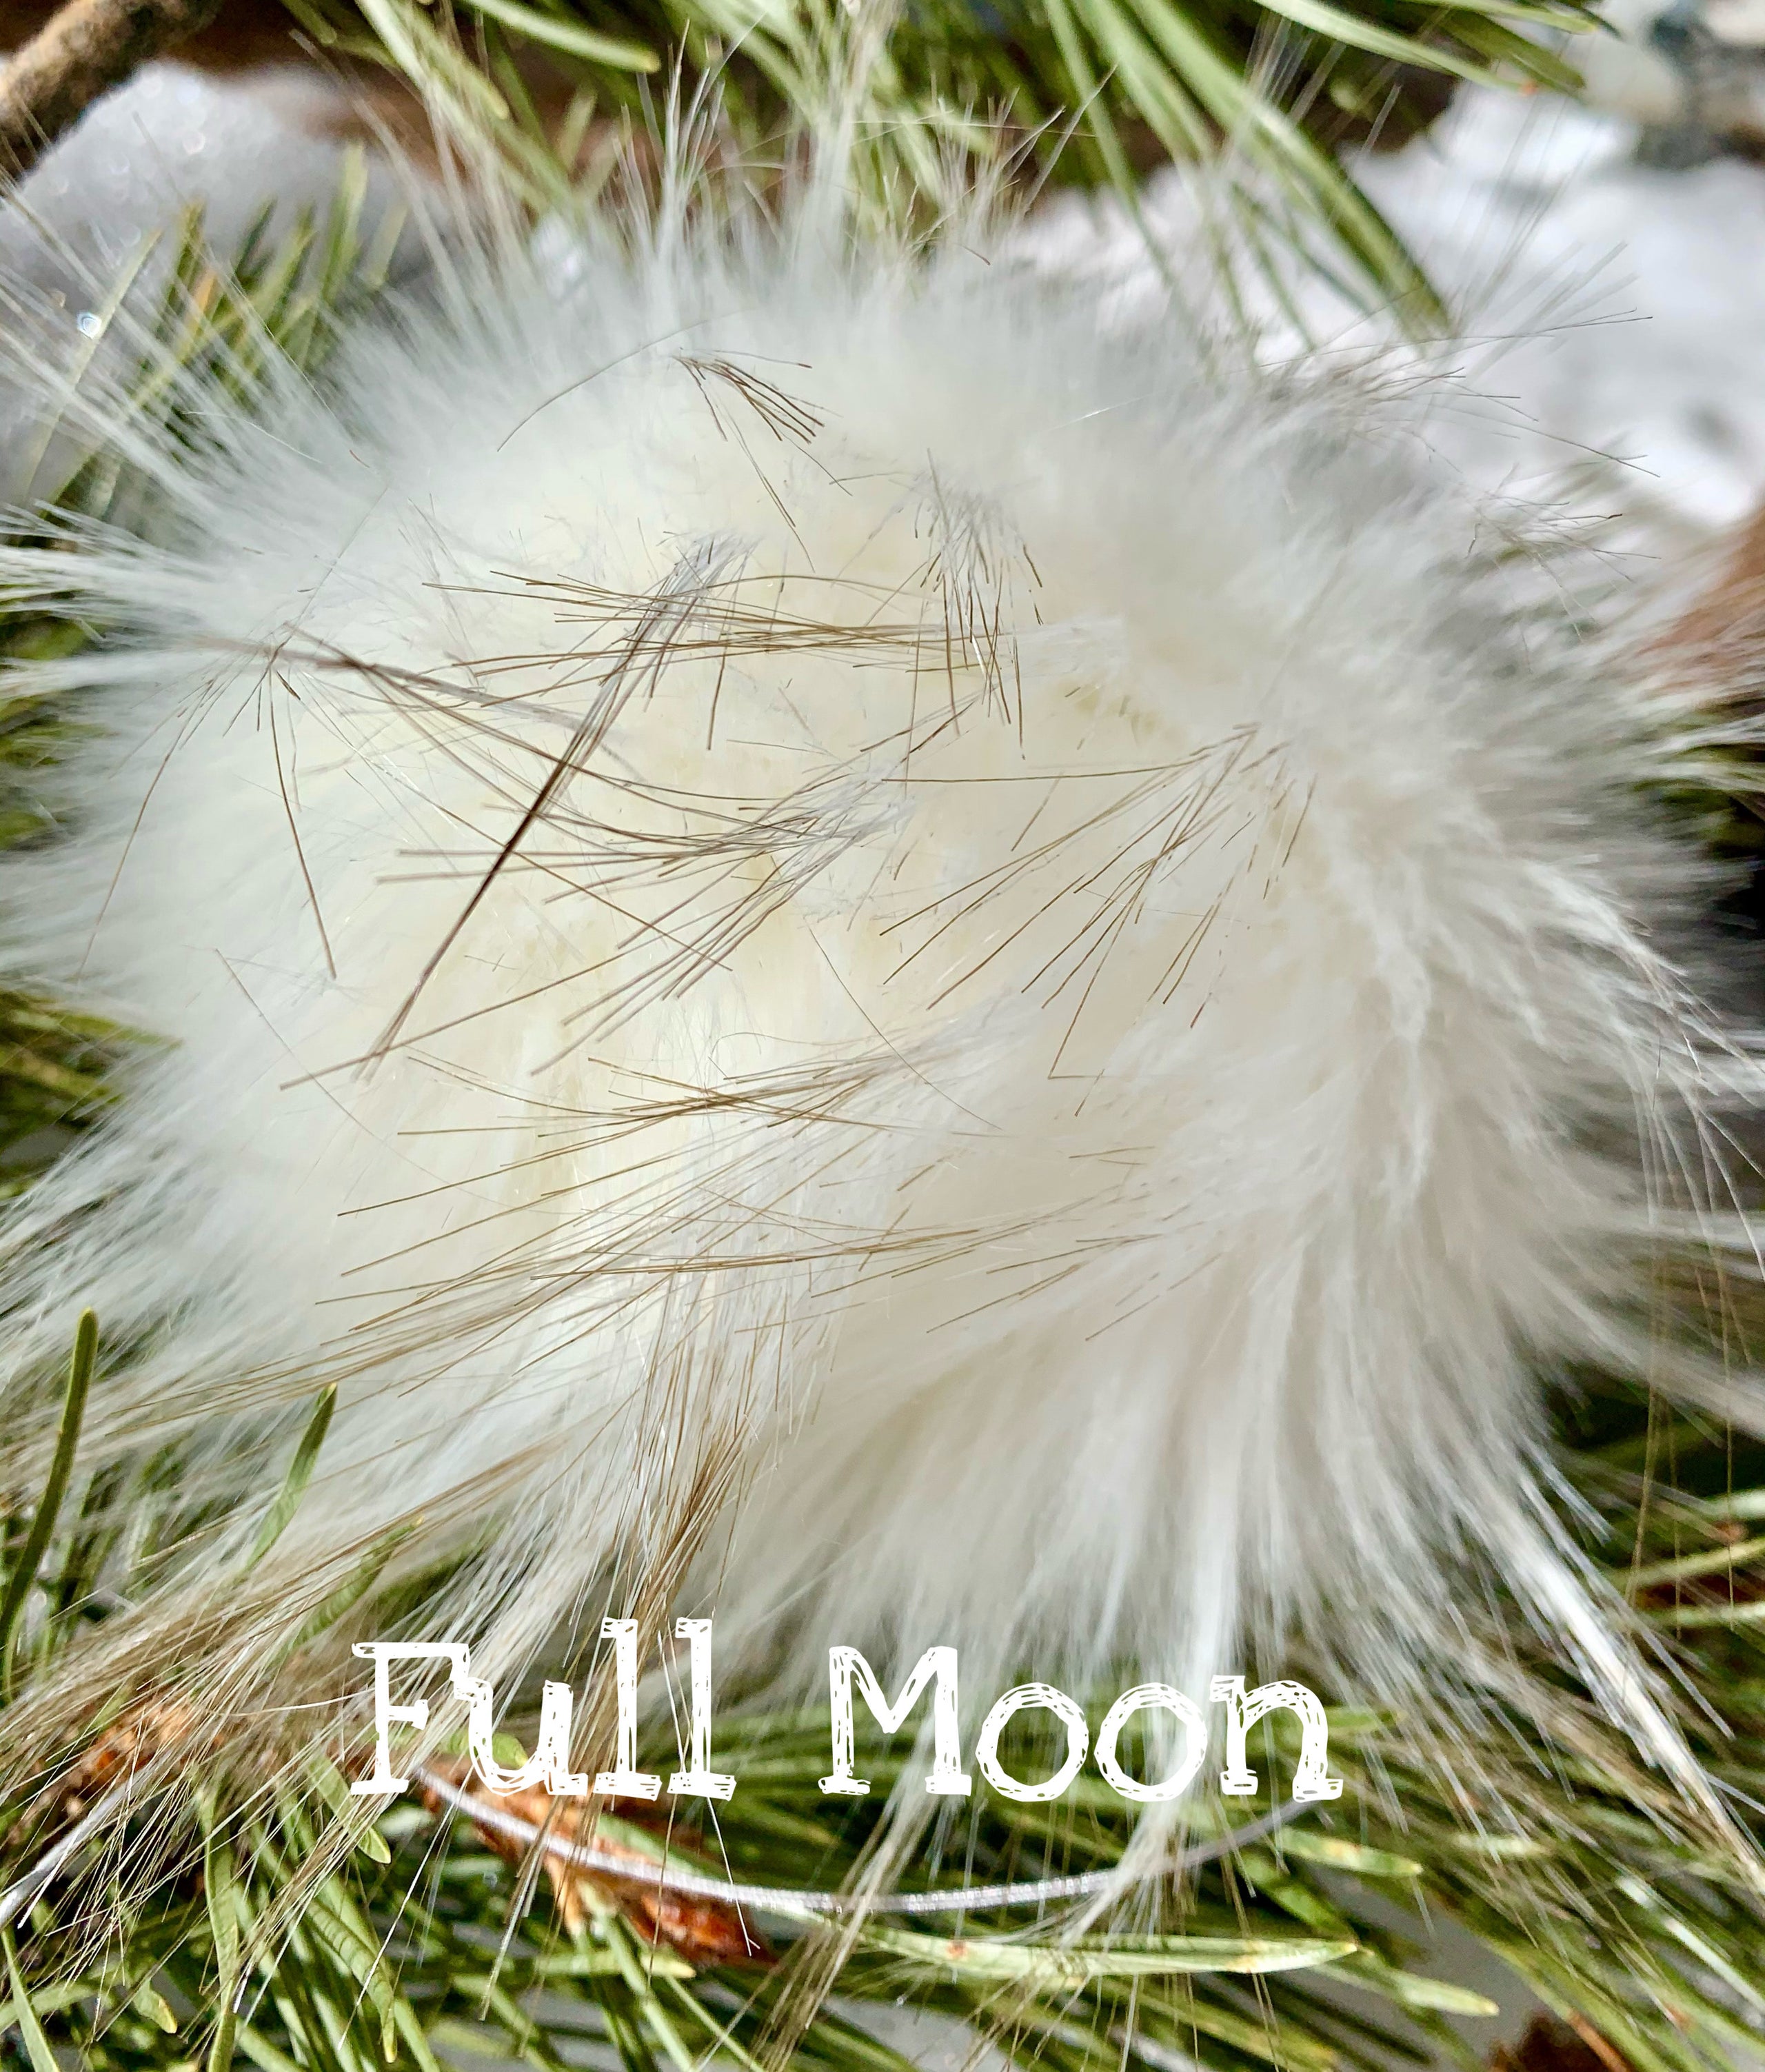 Faux Fur Pom Pom Moss, Snap Closure – Wool and Company